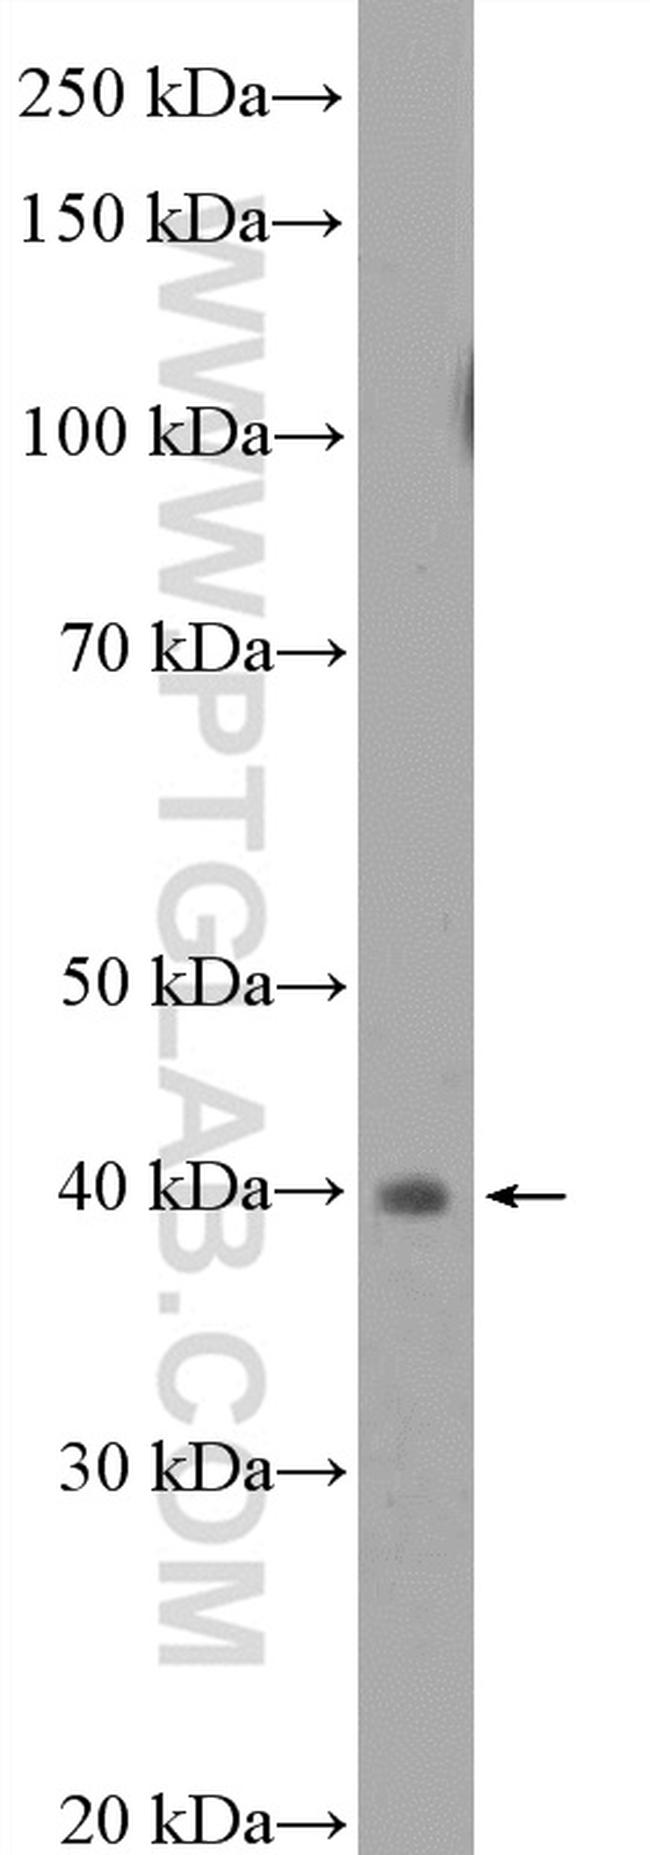 LAMR1/RPSA Antibody in Western Blot (WB)